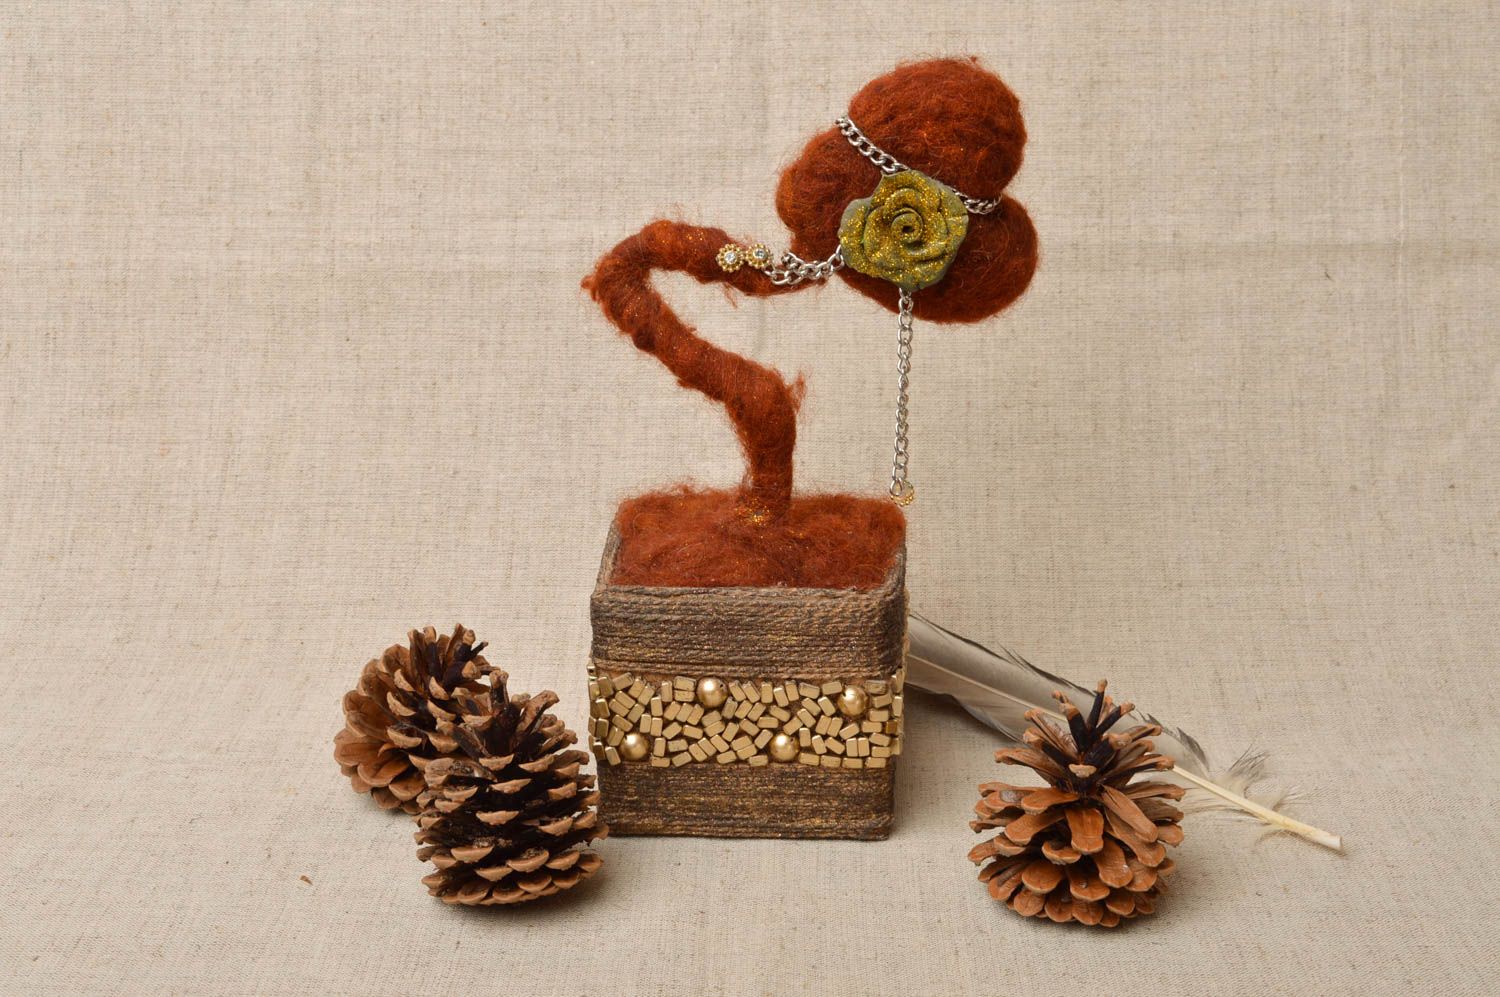 Handmade tree unusual artificial tree gift ideas decorative use only decor ideas photo 1